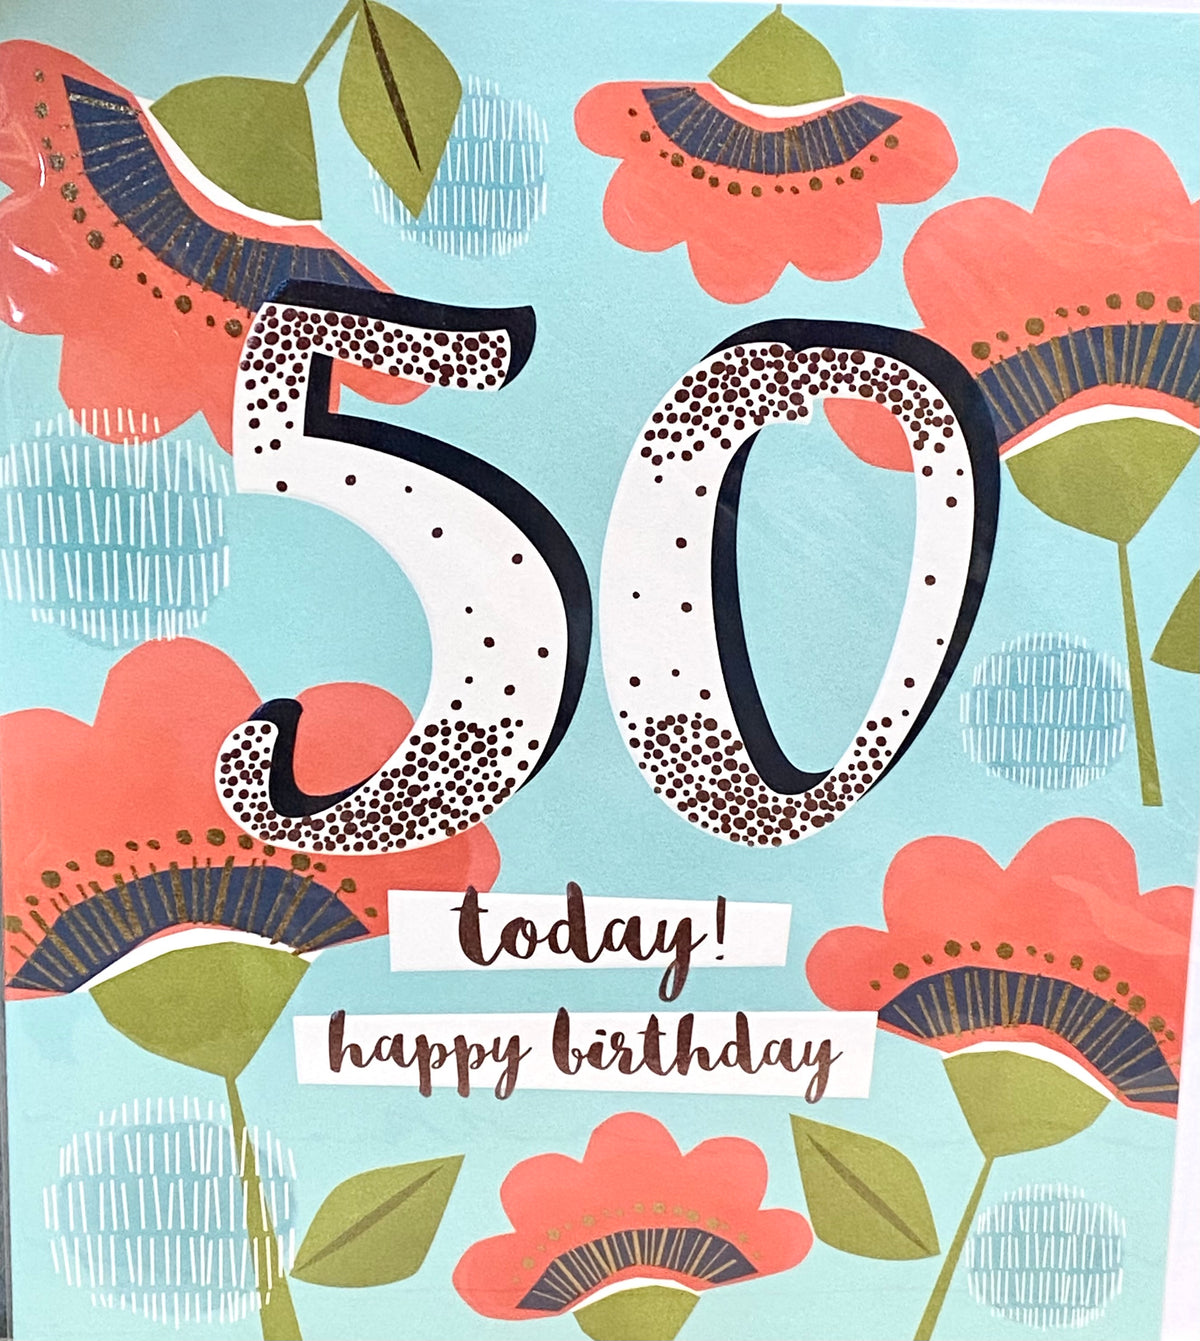 Birthday Card: 50 Today! Happy Birthday